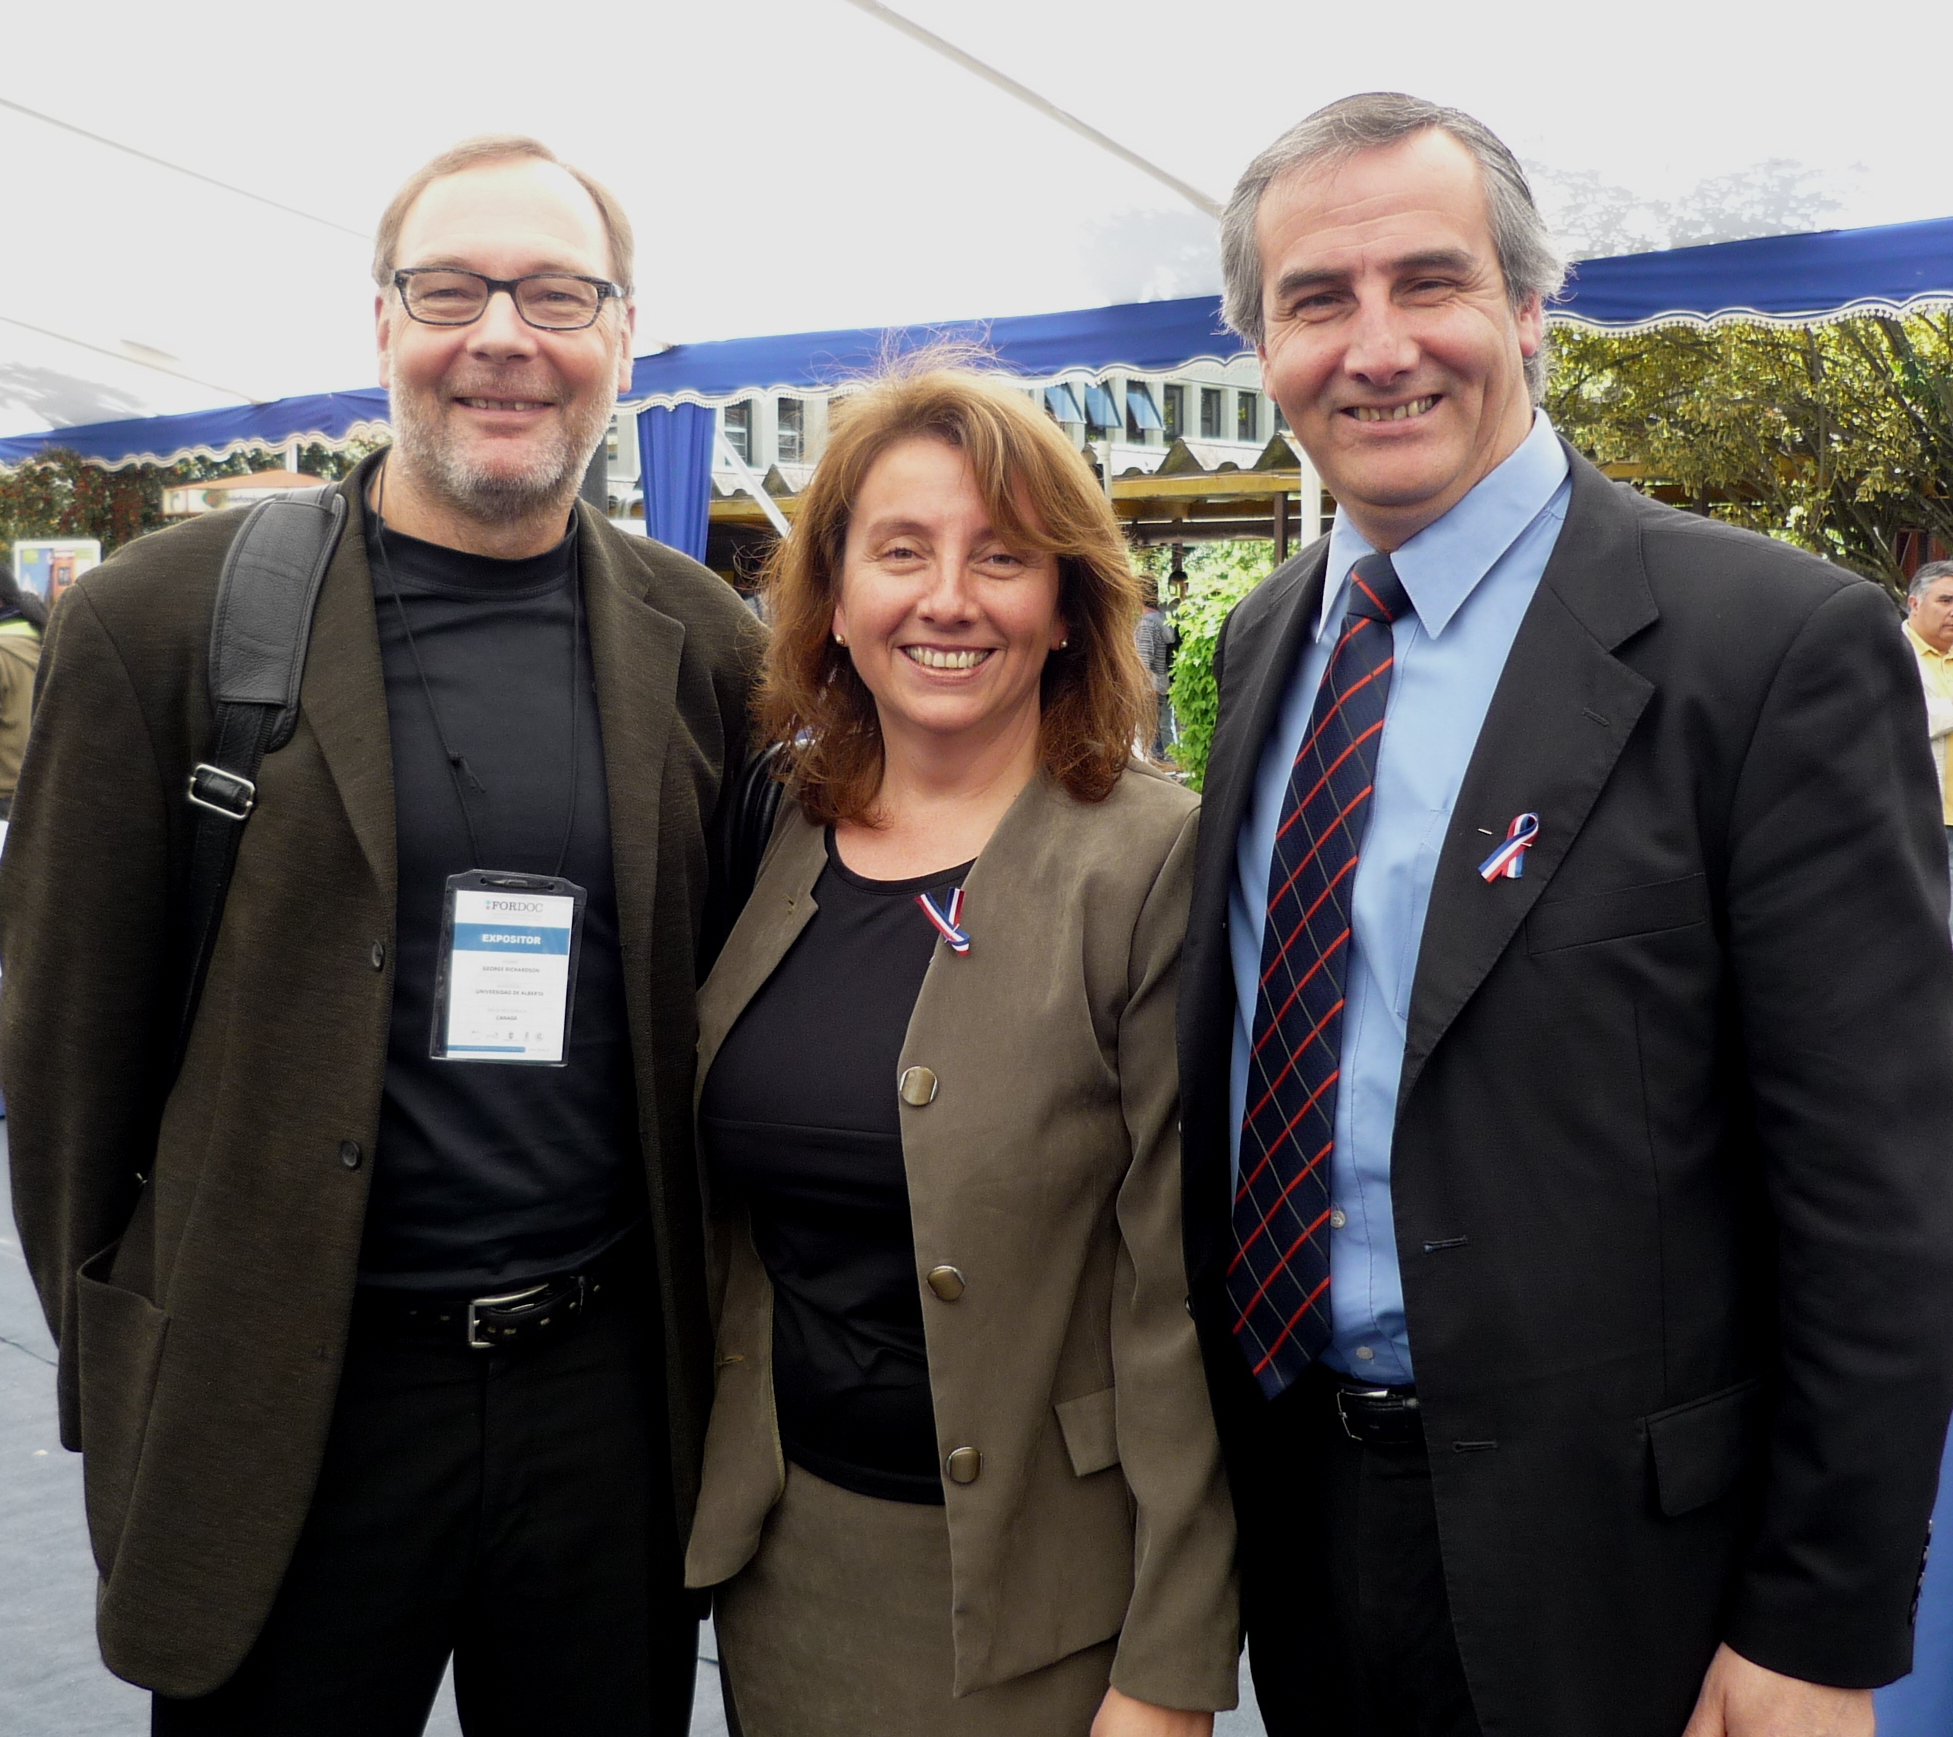 George Richardson, Elizabeth Grandón and Luis Vitalino Grandón at event of UBB